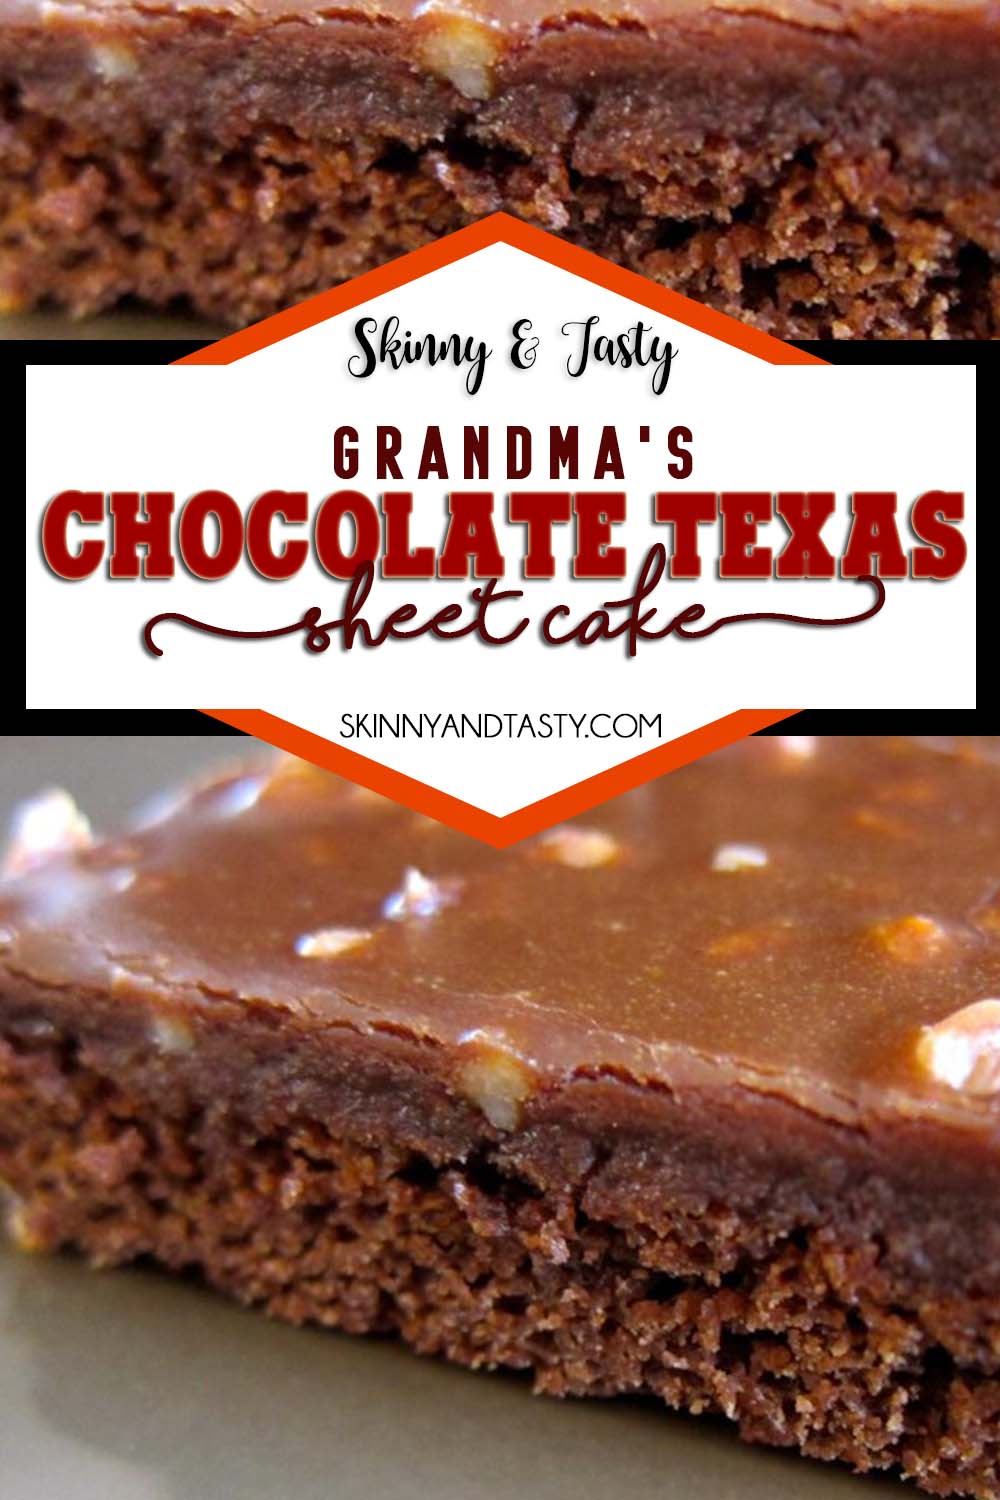 https://skinnyandtasty.com/wp-content/uploads/2020/04/Grandmas-Chocolate-Texas-Sheet-Cake-1.jpg